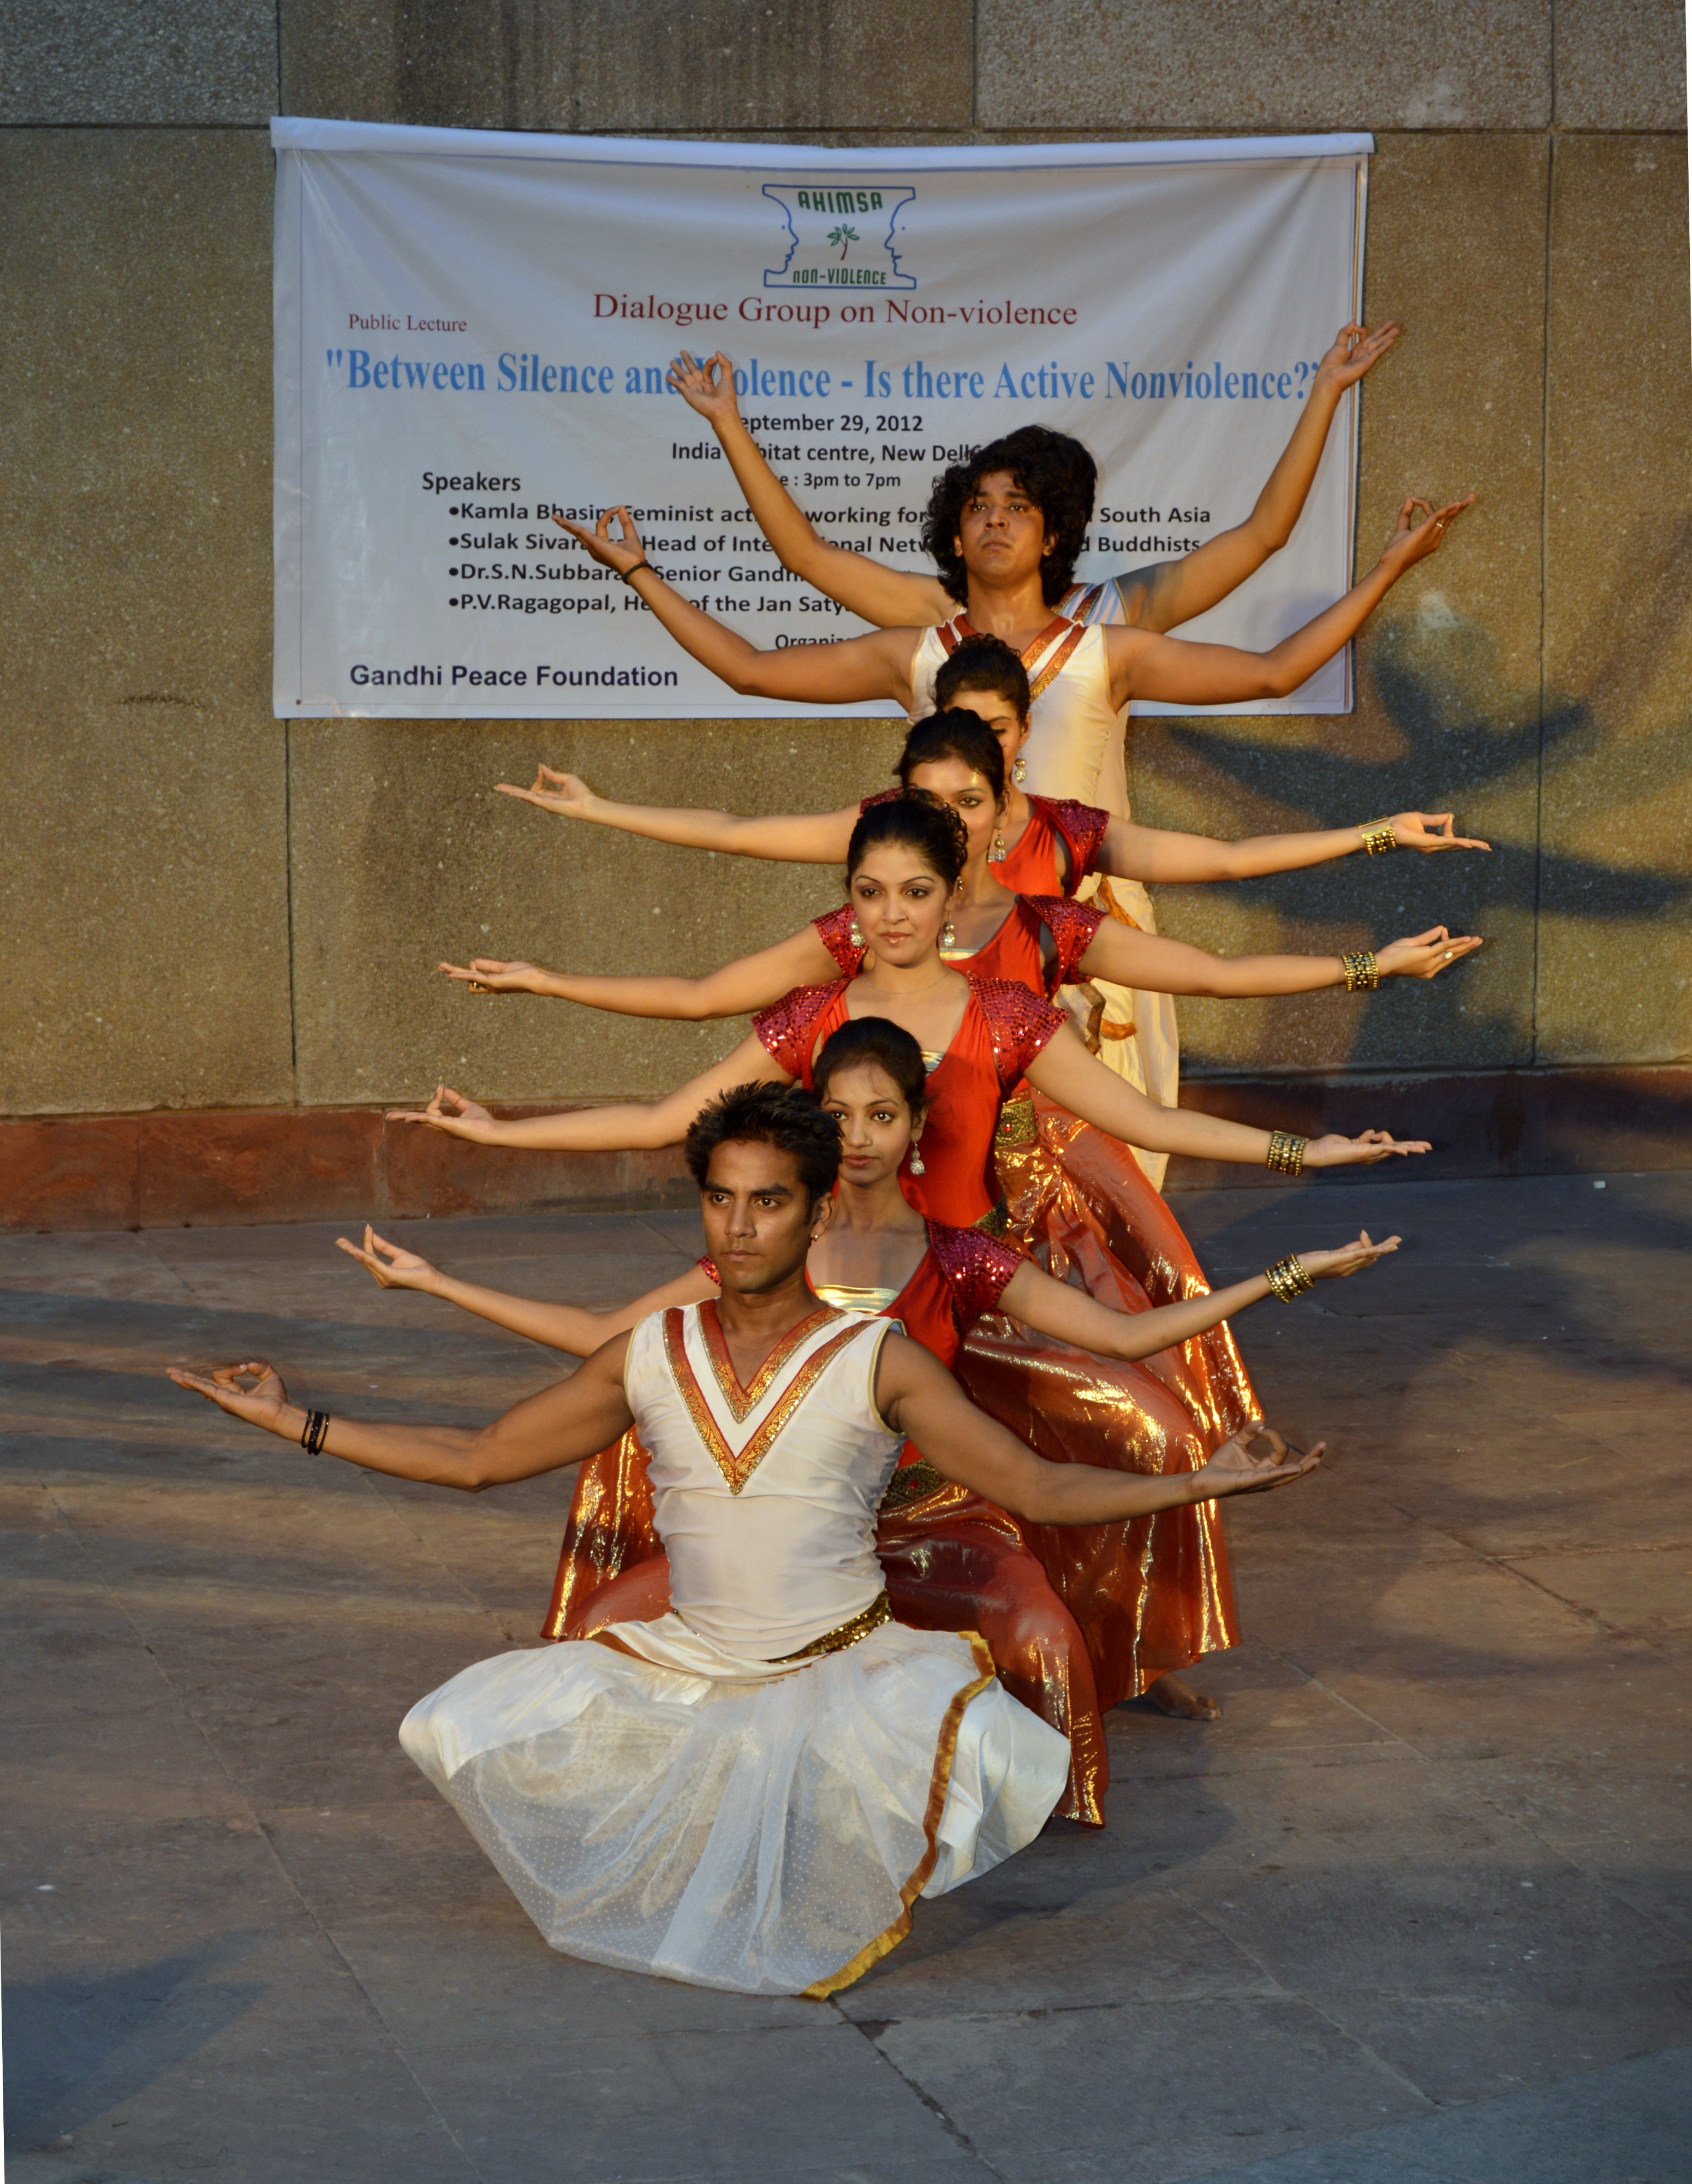 Modern Indian dance, India Habitat Centre, New Delhi, India